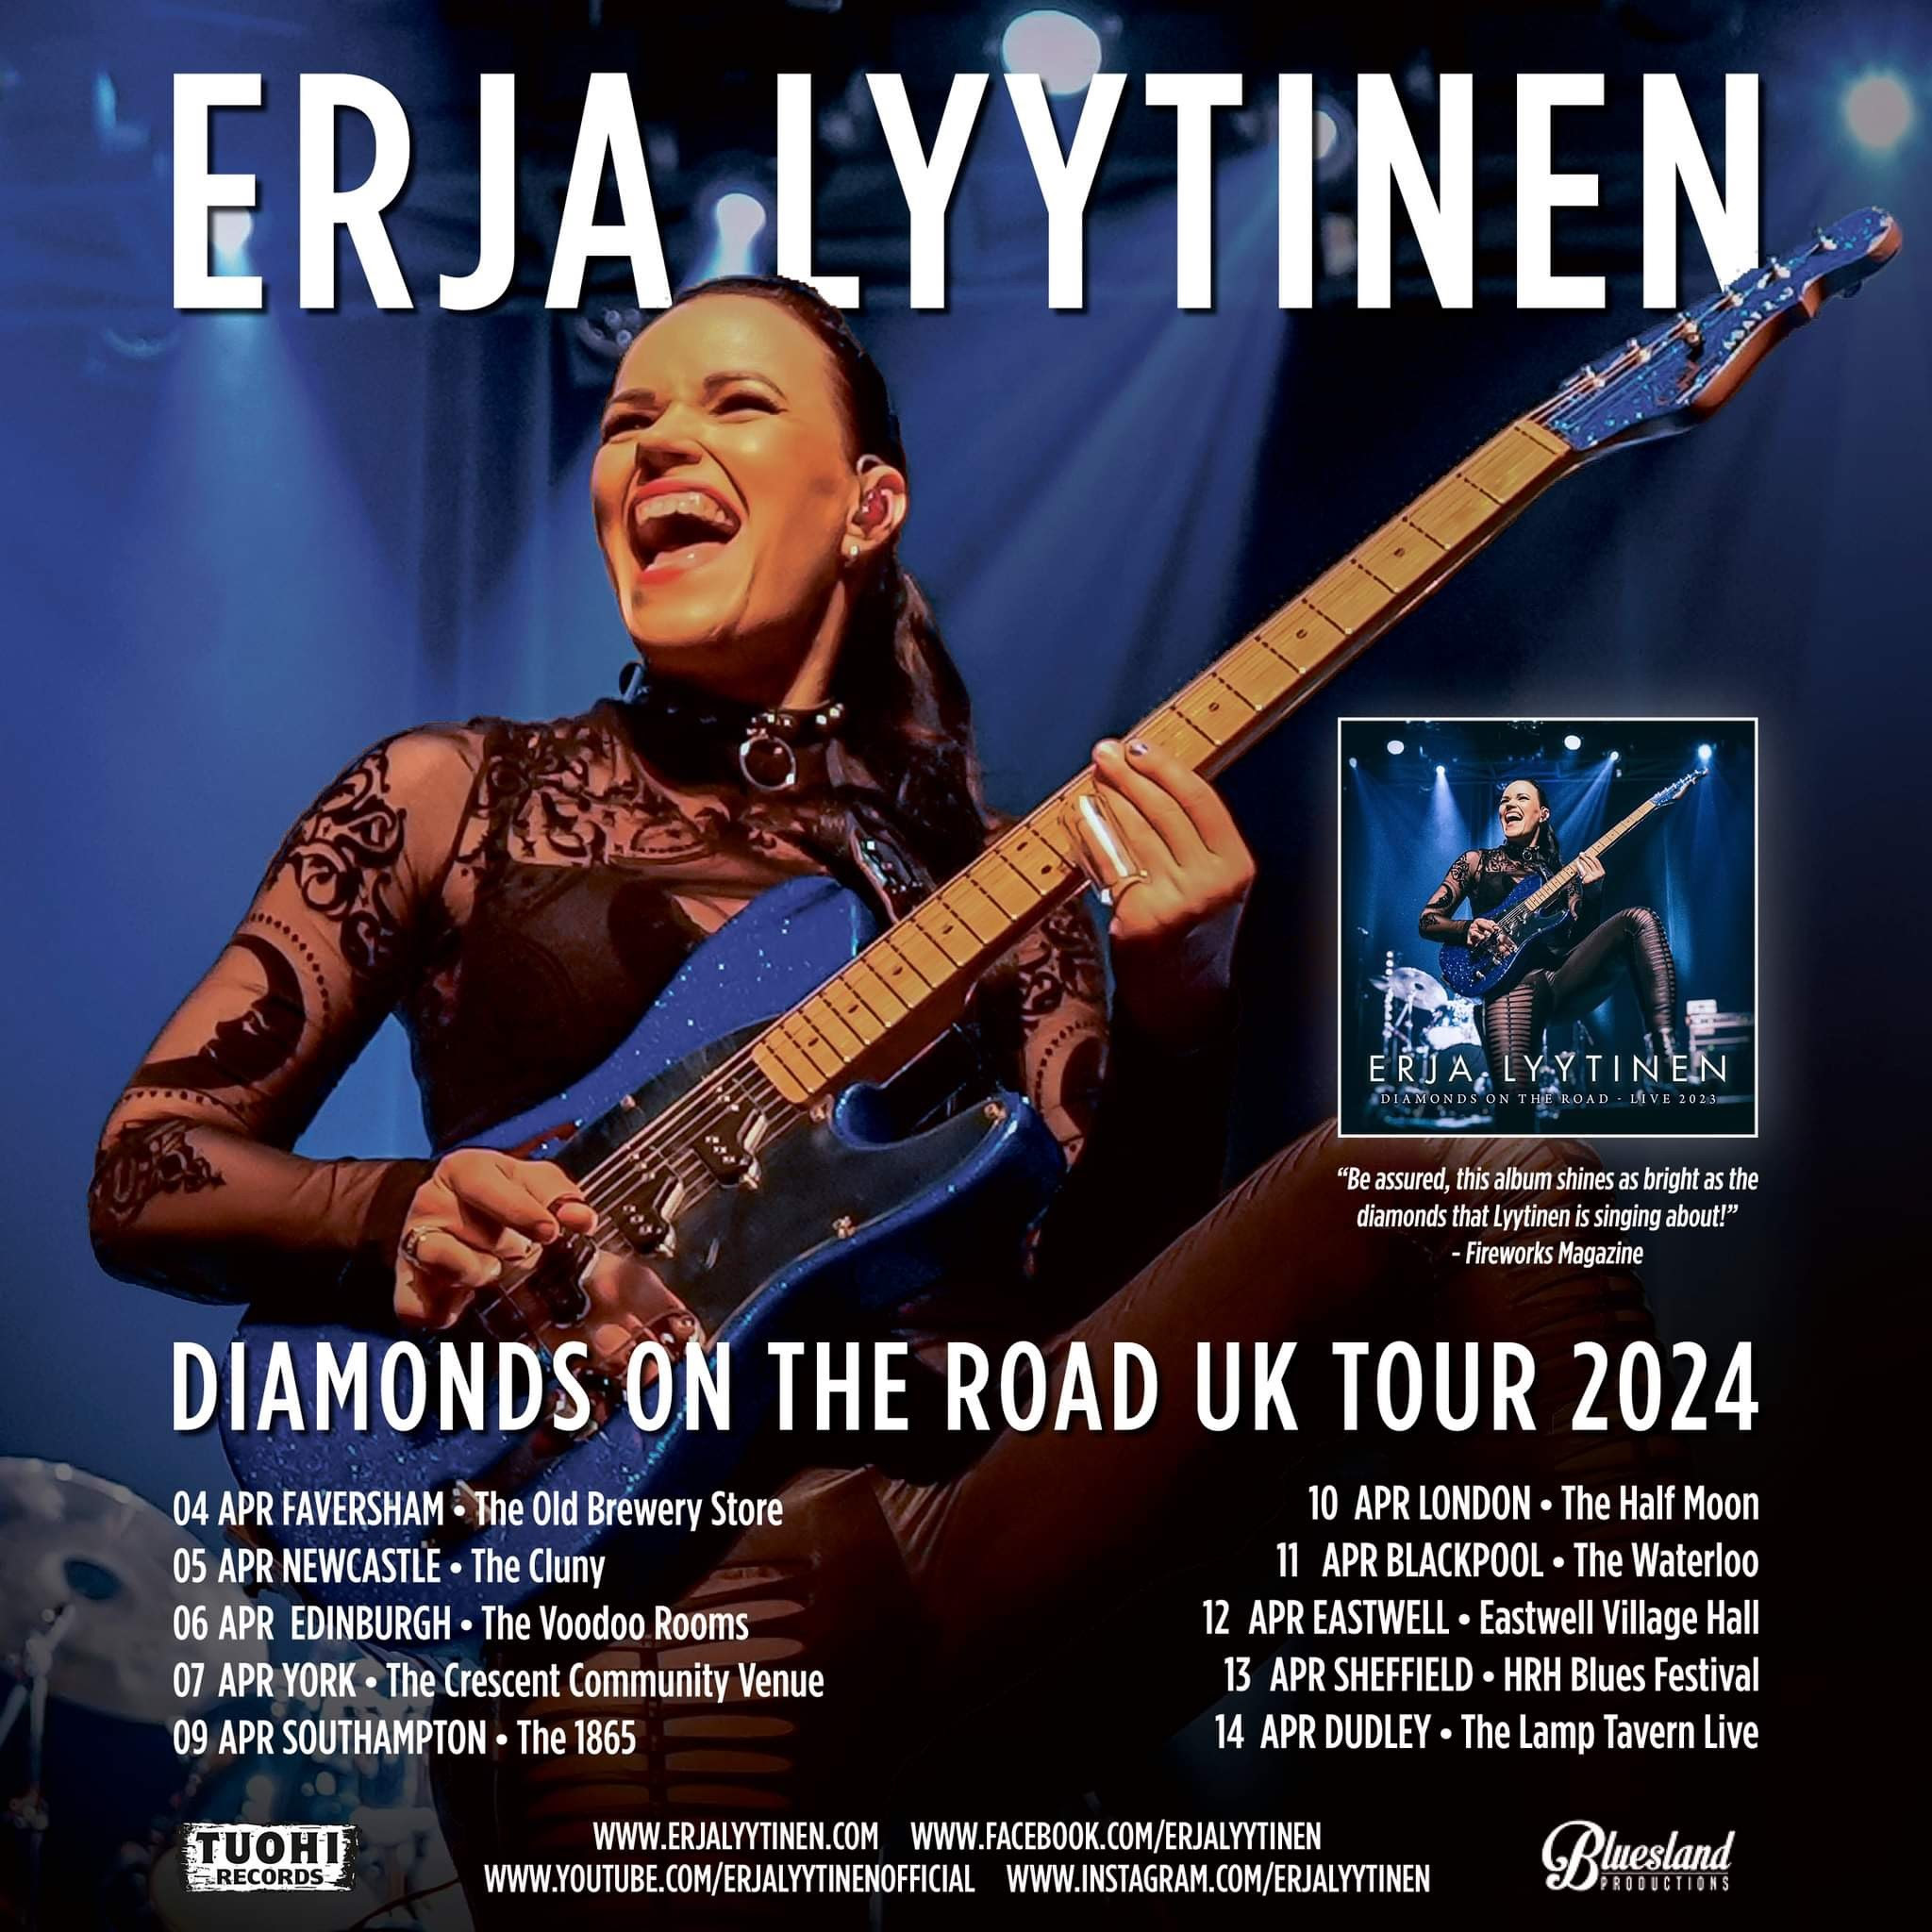 Celebrated slide guitarist "Erja Lyytinen" announces "Diamonds on the